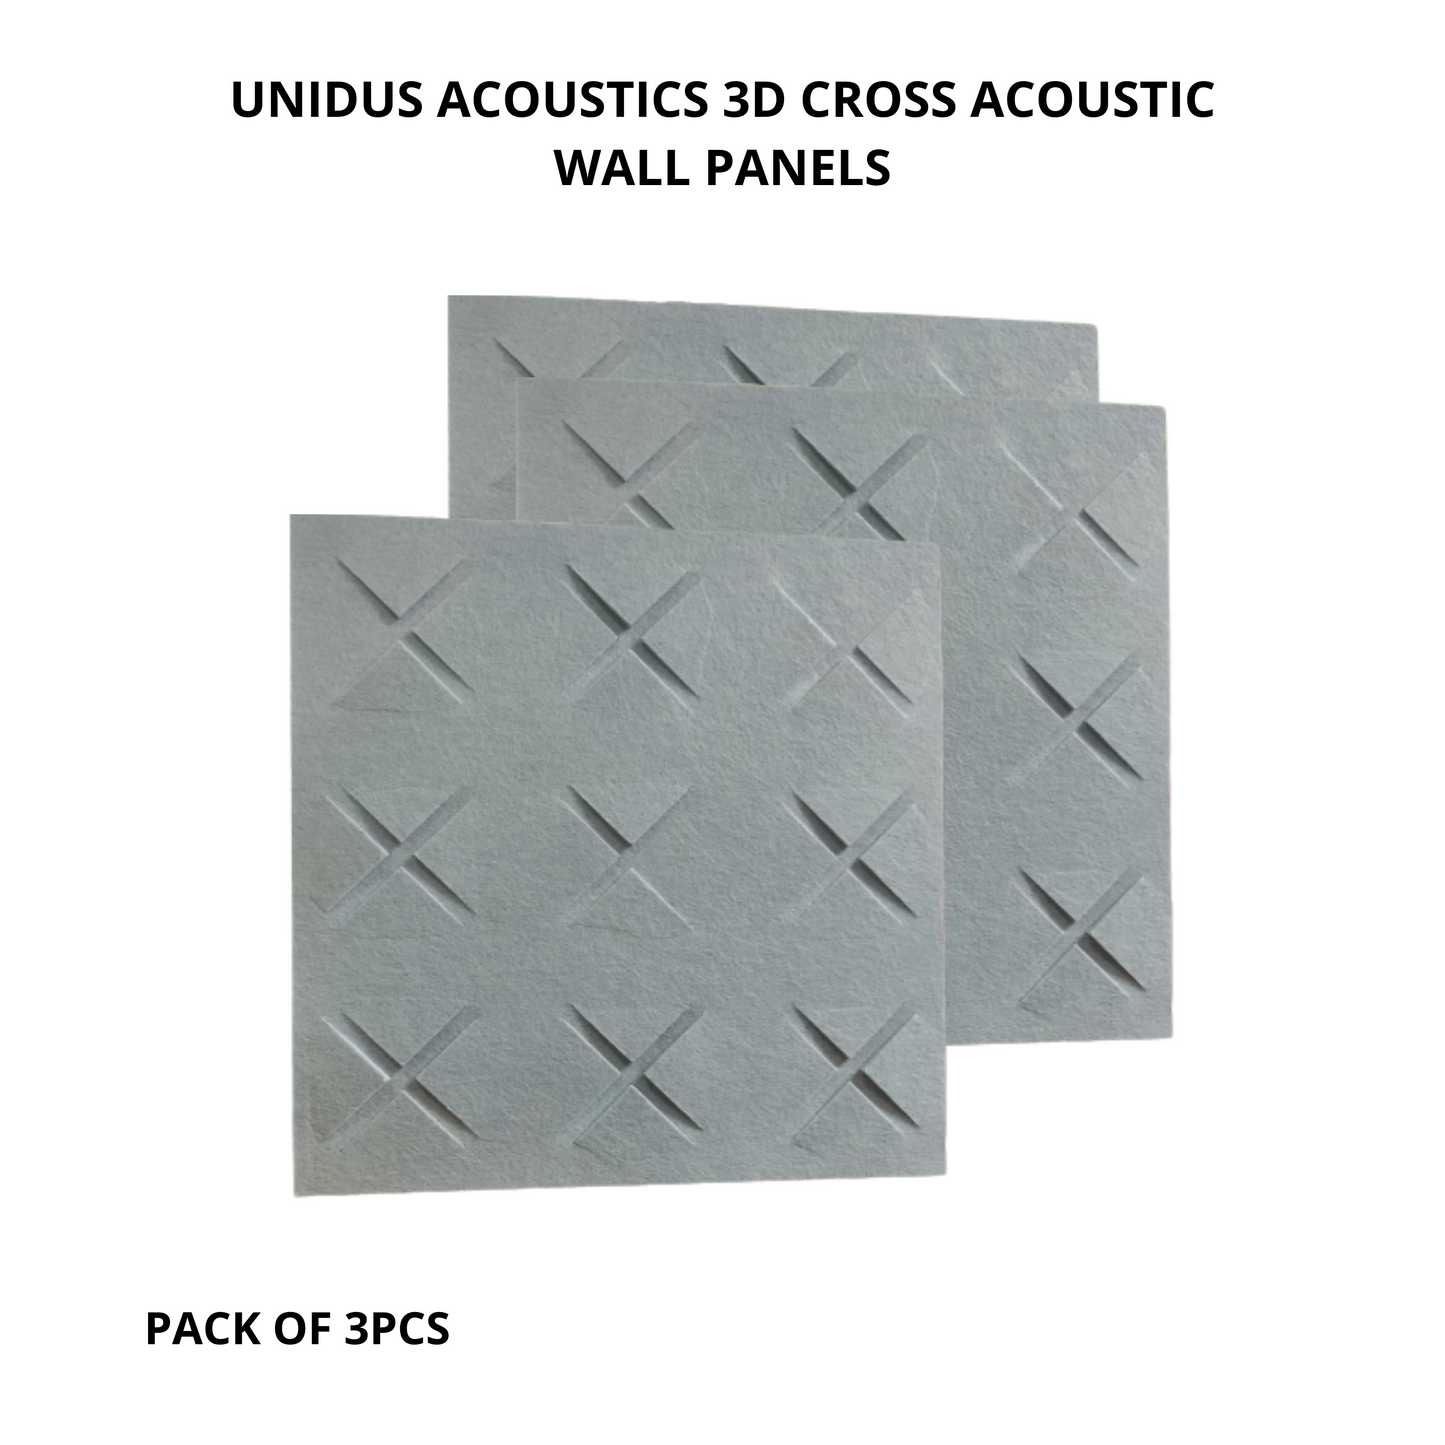 3D Cross Acoustic Wall Panels, 12"x12"x 9mm, Misty Grey Soundproof Panels | Acoustic Panel for Soundproofing